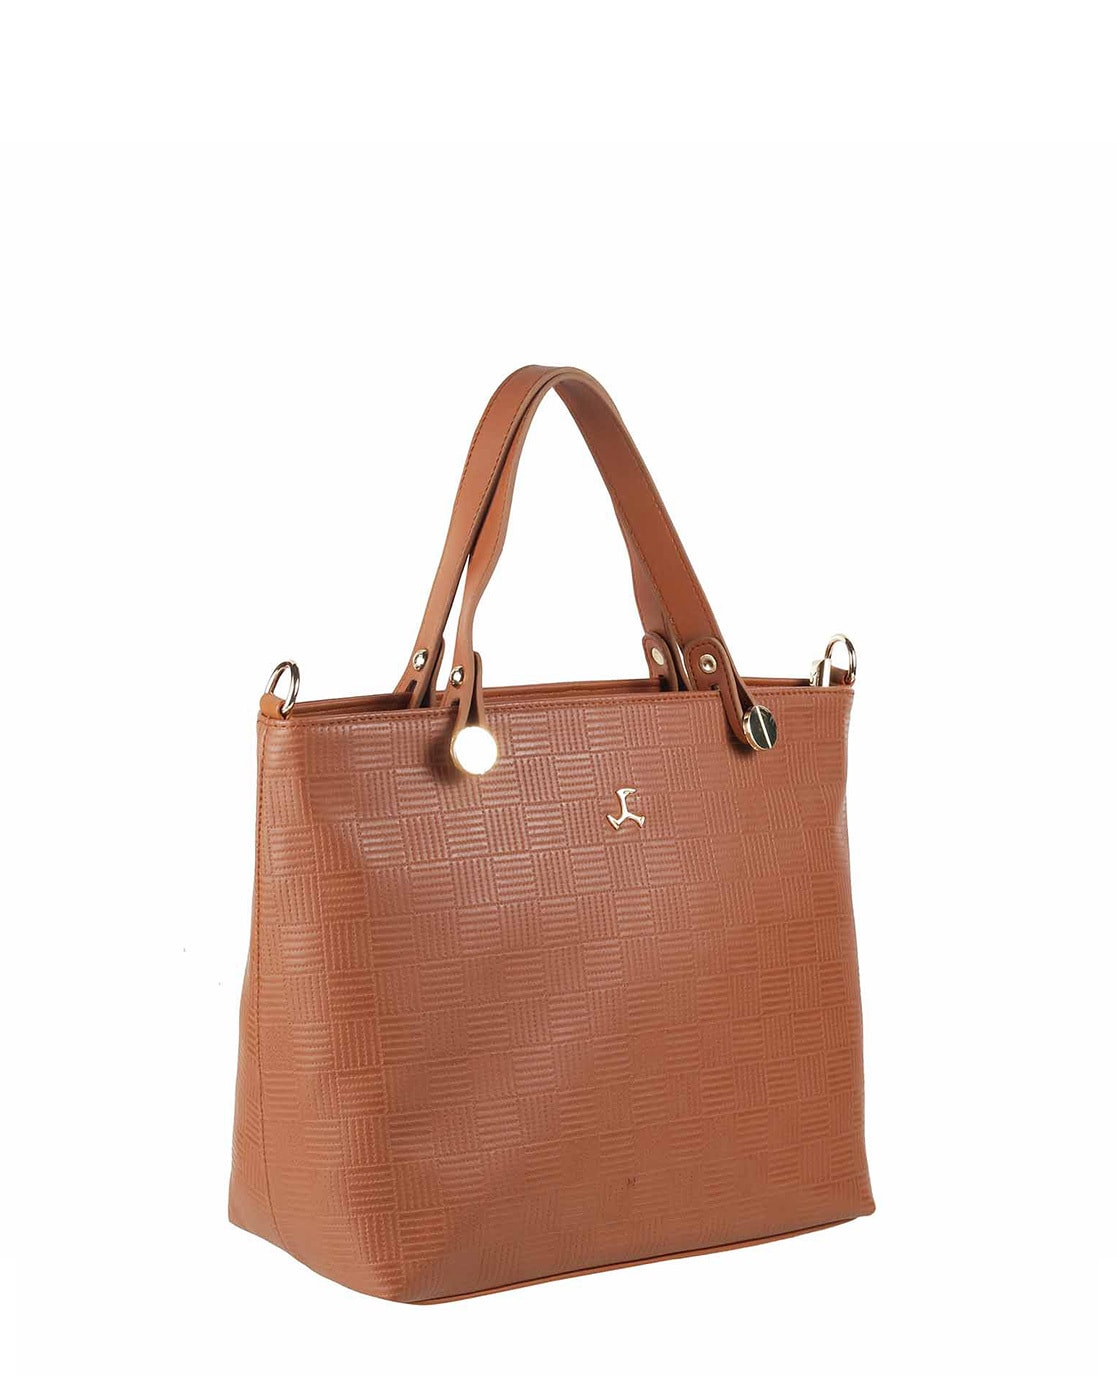 Mochi Handbags Sling Bags - Buy Mochi Handbags Sling Bags online in India